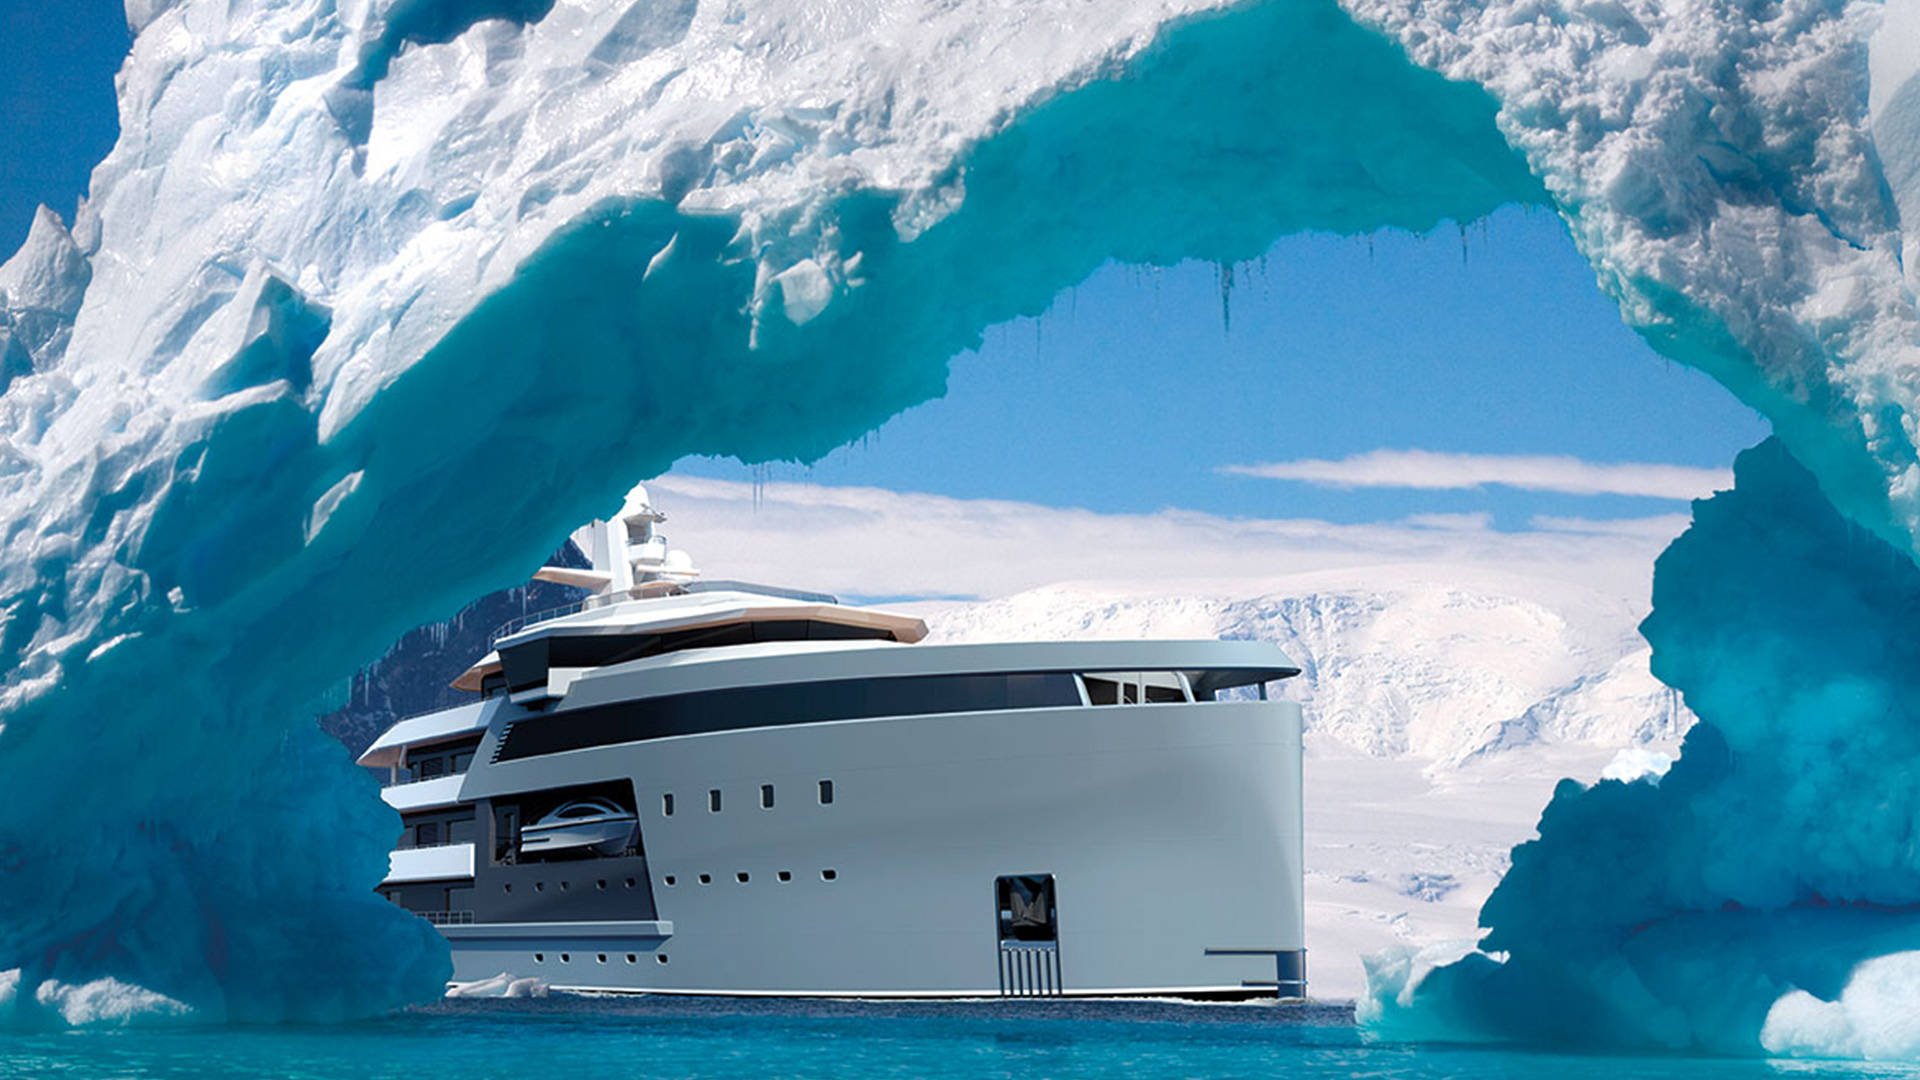 seaxplorer-expedition-super-yacht-90m-antarctica_opt